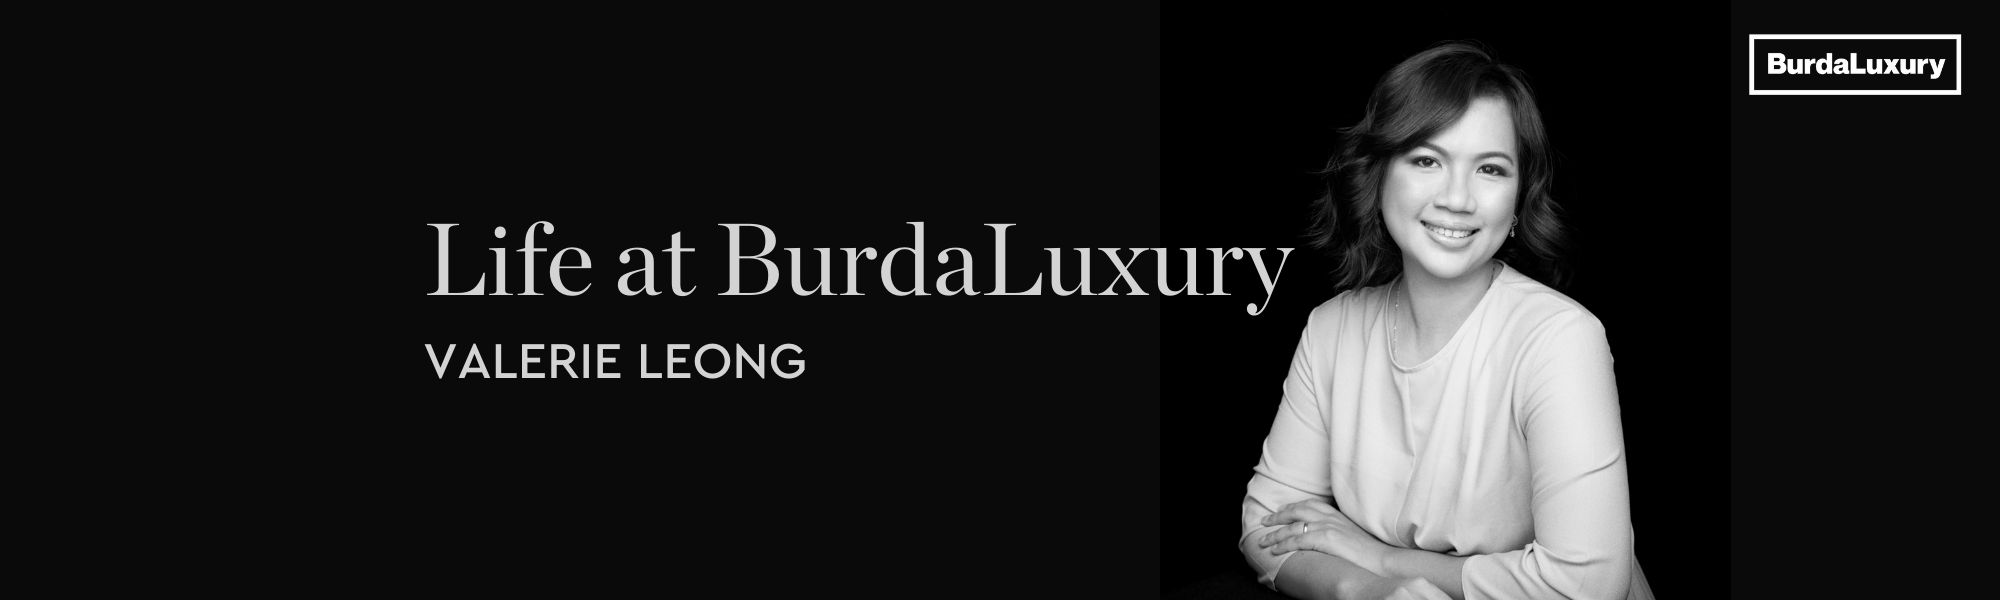 Life at BurdaLuxury - Valerie Leong